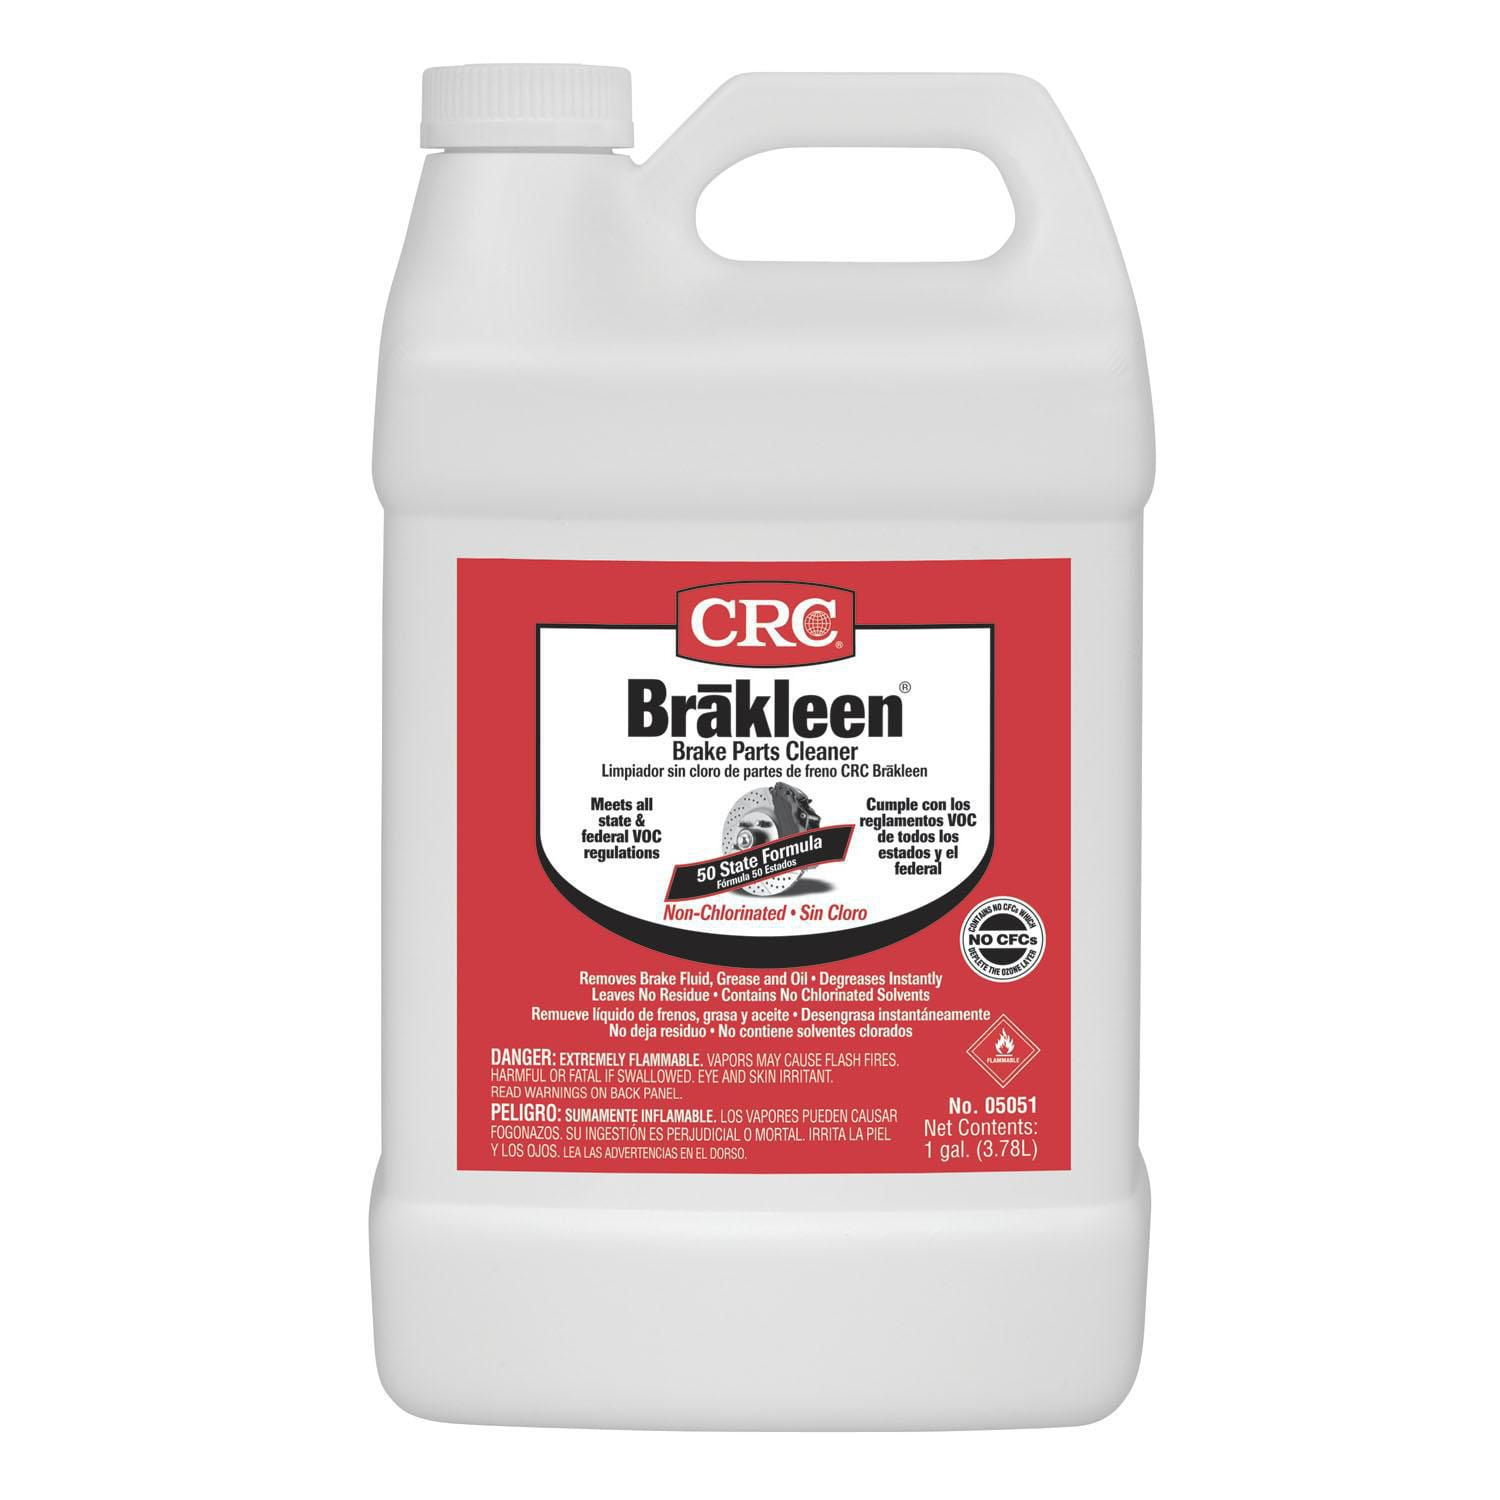 CRC *Brakleen Brake Parts Cleaner - 50 State Formula - Non-Chlorinated, 1  gallon jug, sold by gallon 